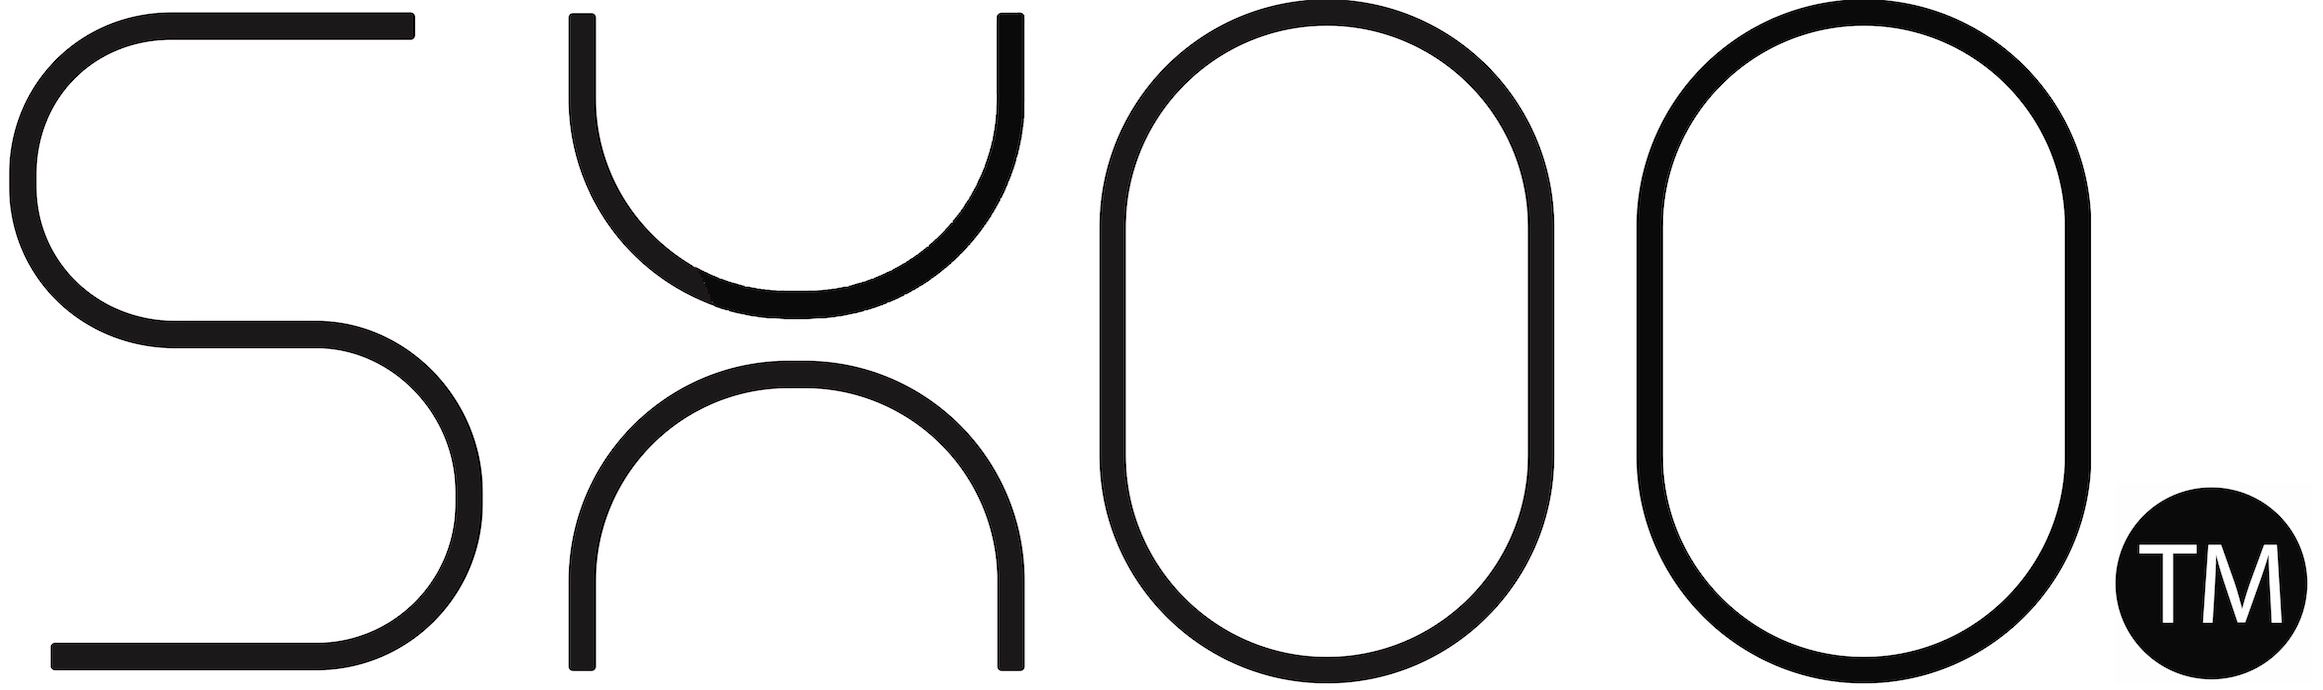 SHOO LLC Logo